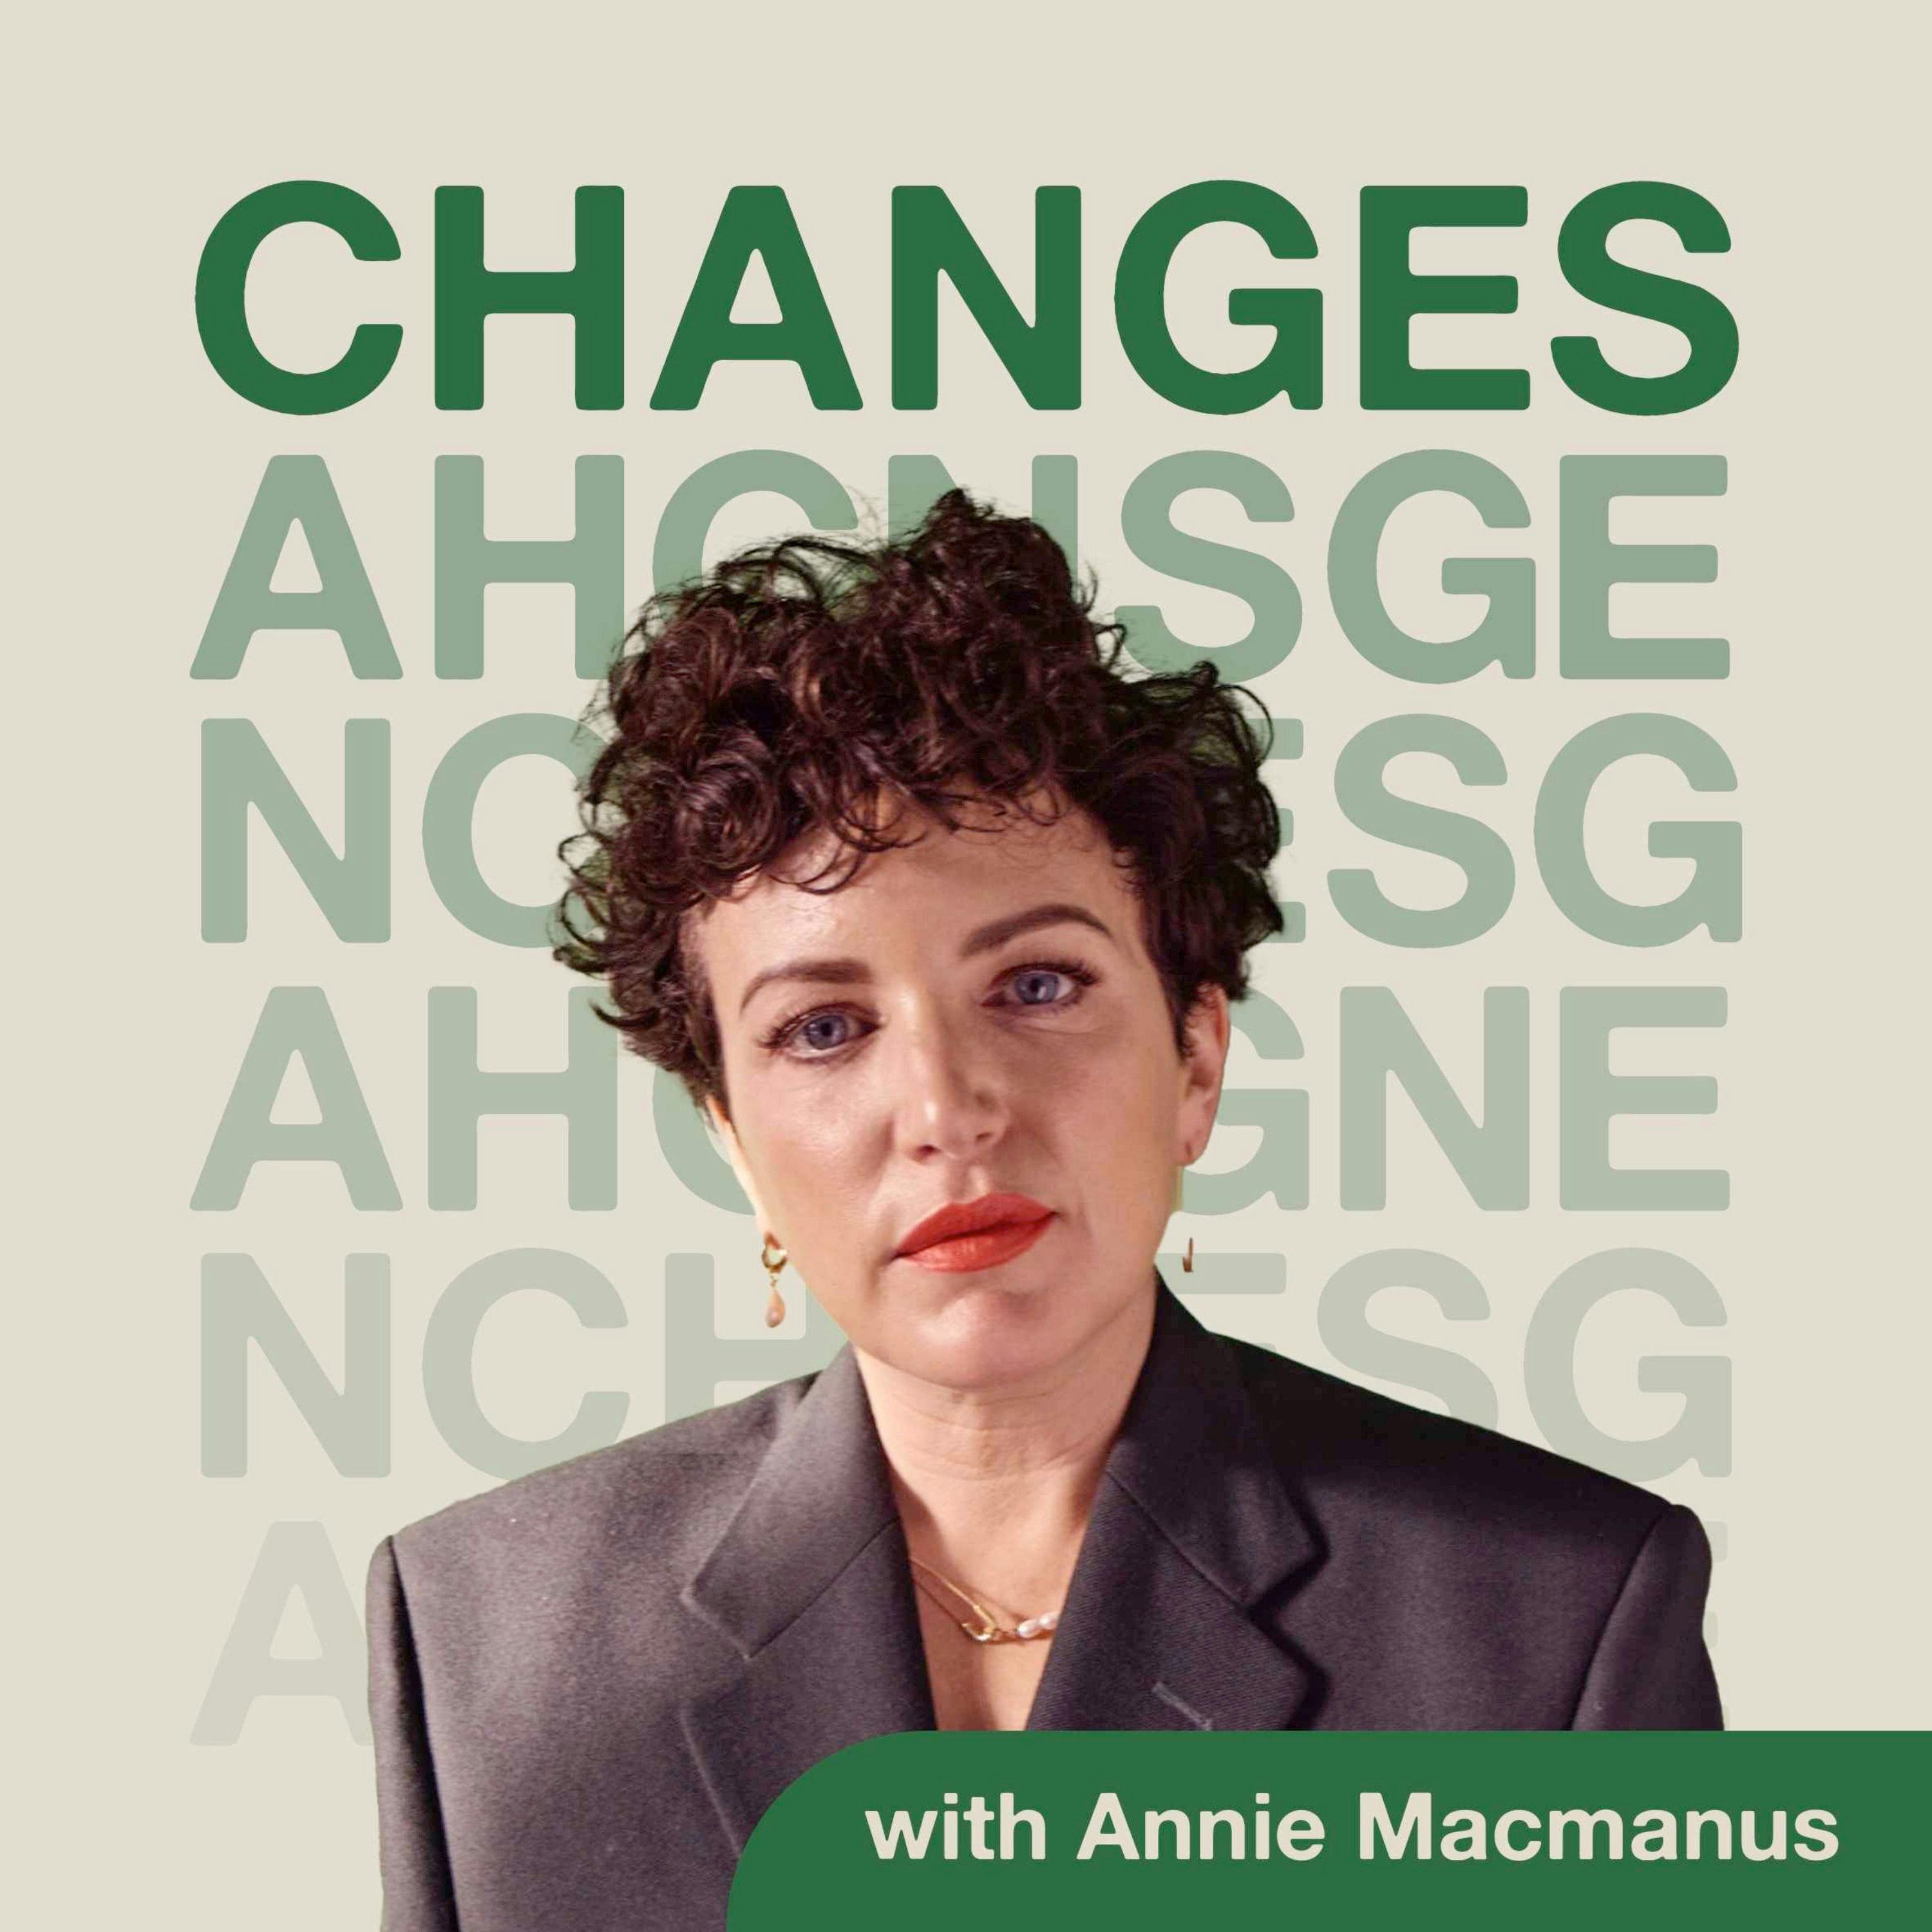 Changes with Annie Macmanus